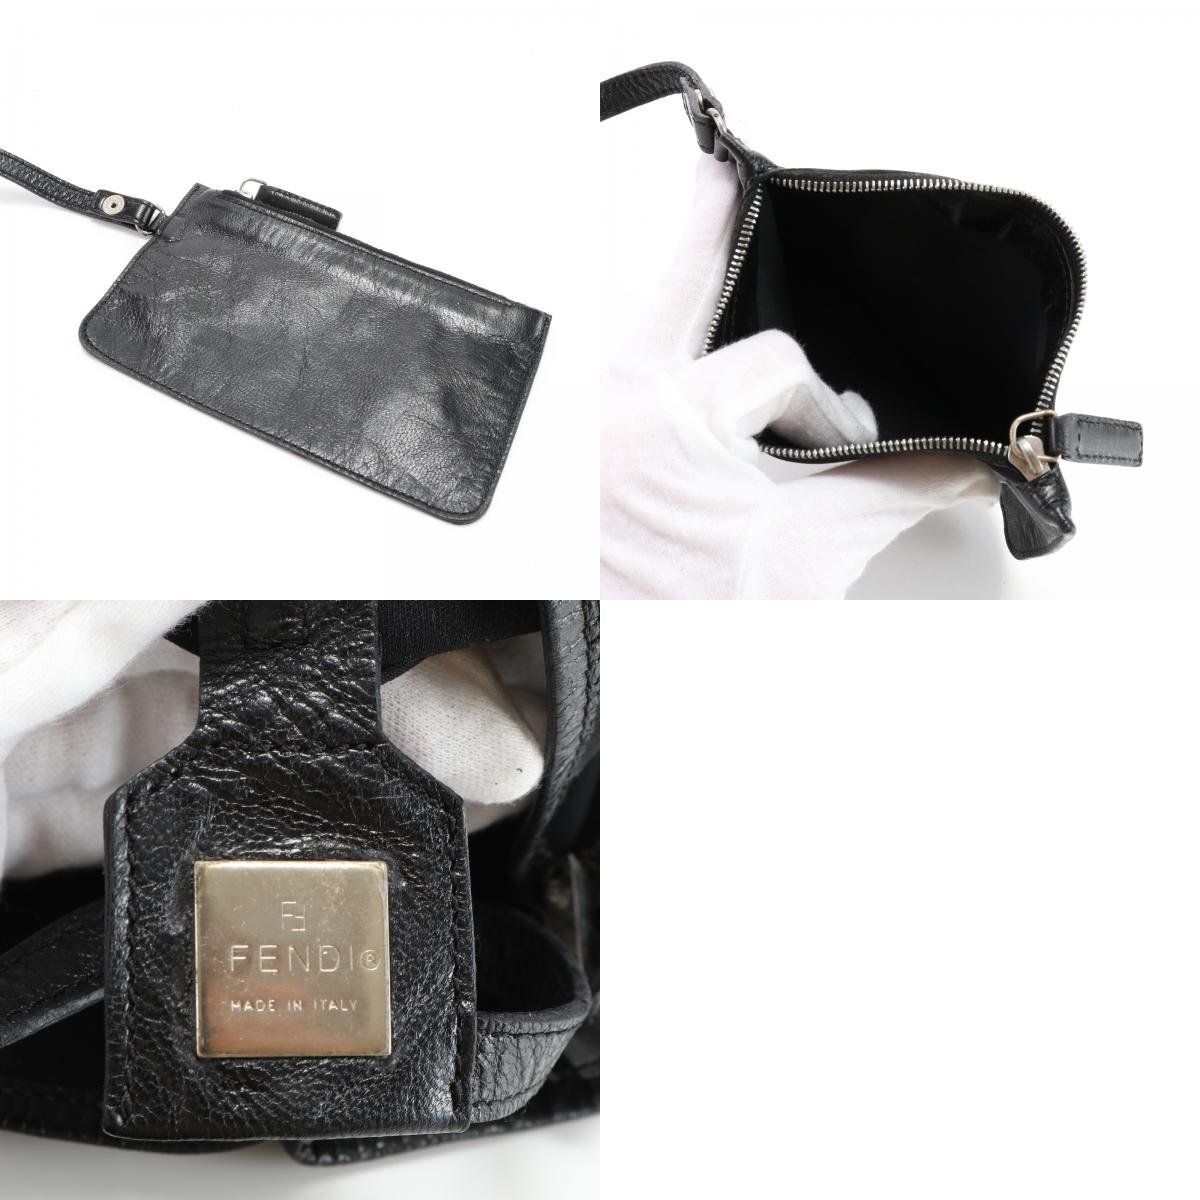 1 jpy # Fendi # leather canvas tote bag shoulder business commuting original leather black black pouch attaching men's lady's EEM T13-6